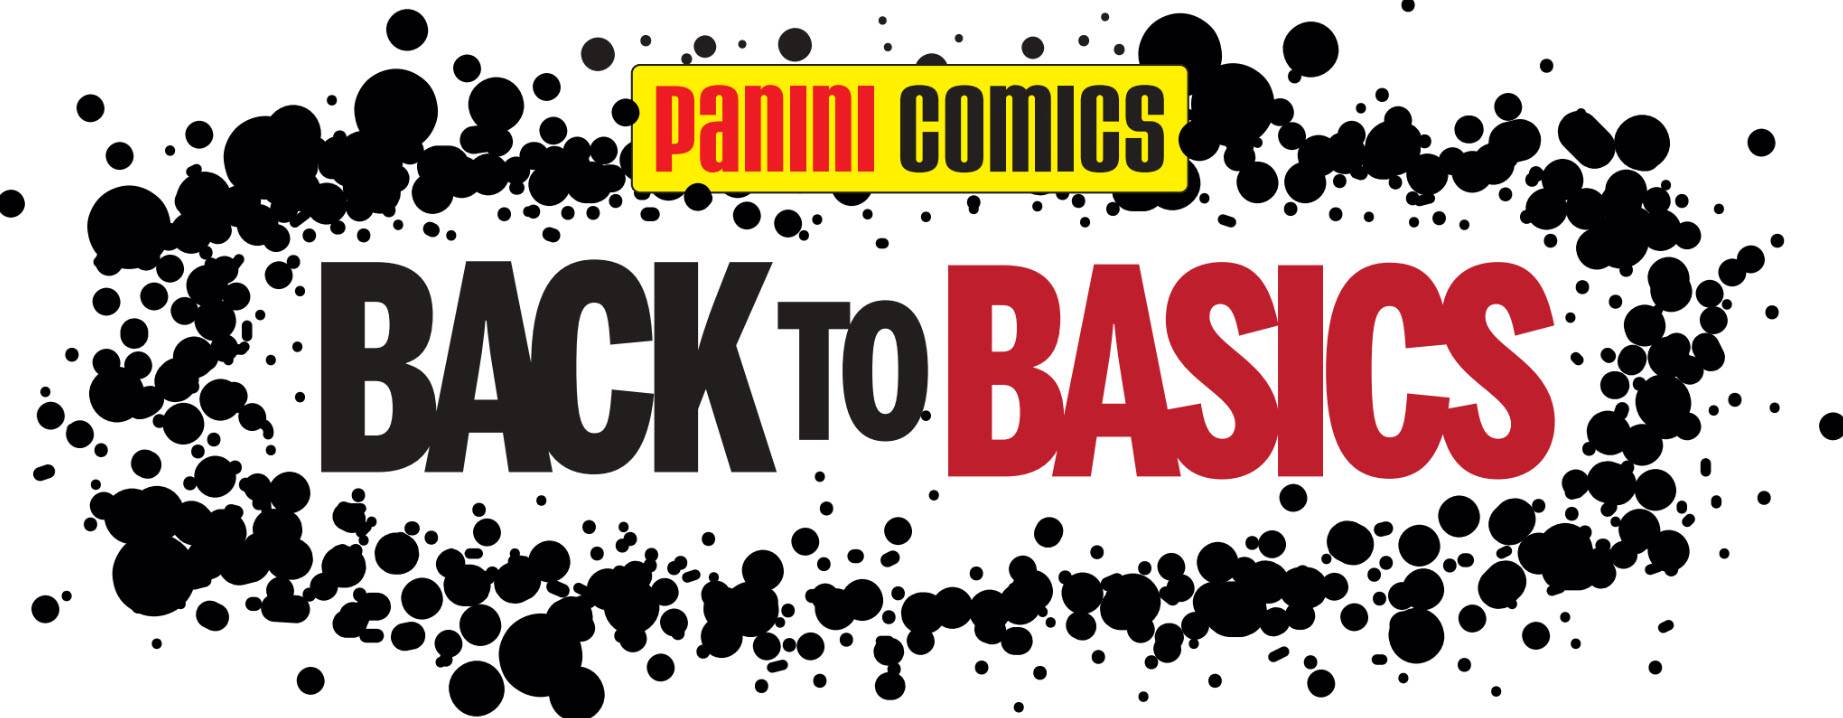 panini comics back to the basics